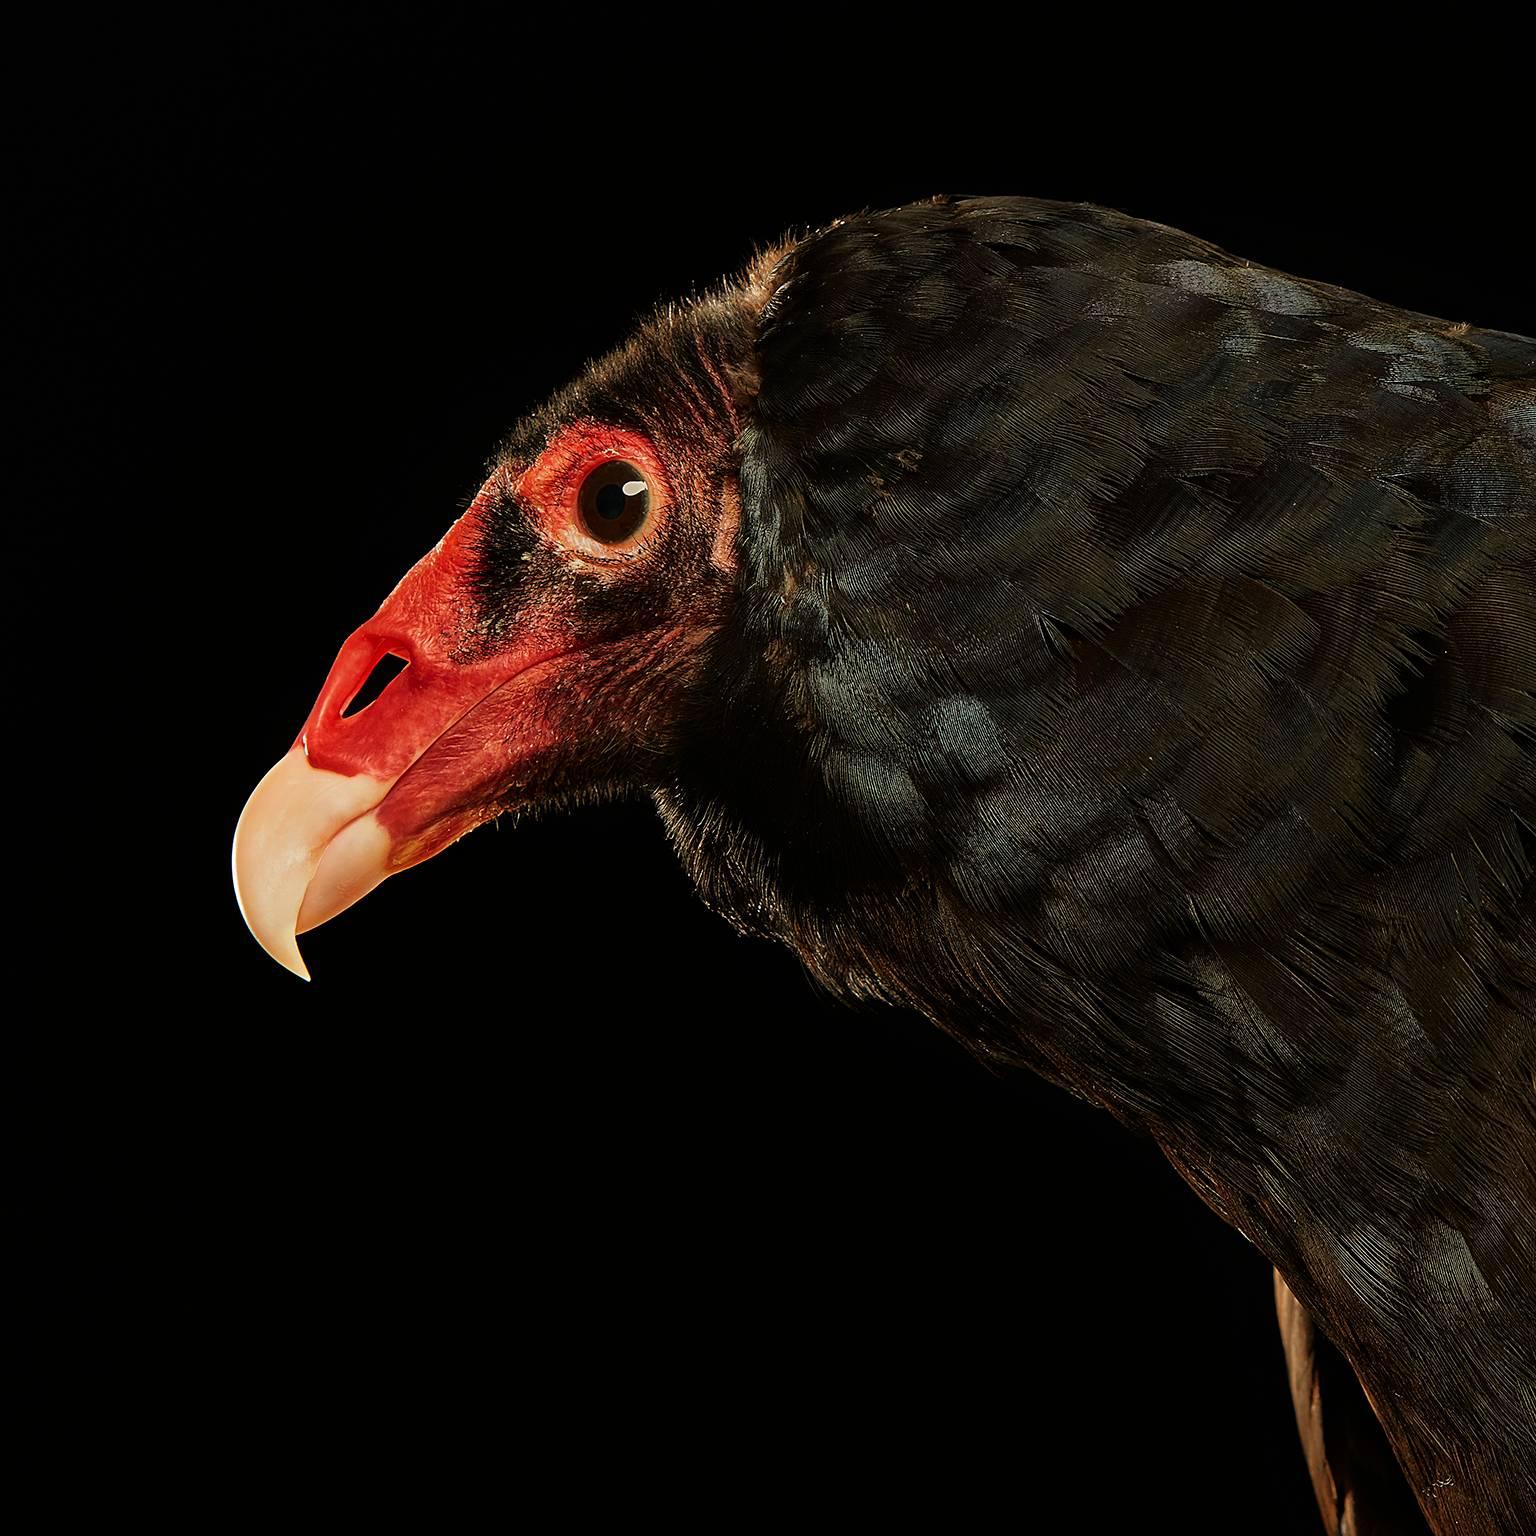 Birds of Prey - Turkey Vulture No. 9 - Photograph by Chris Gordaneer